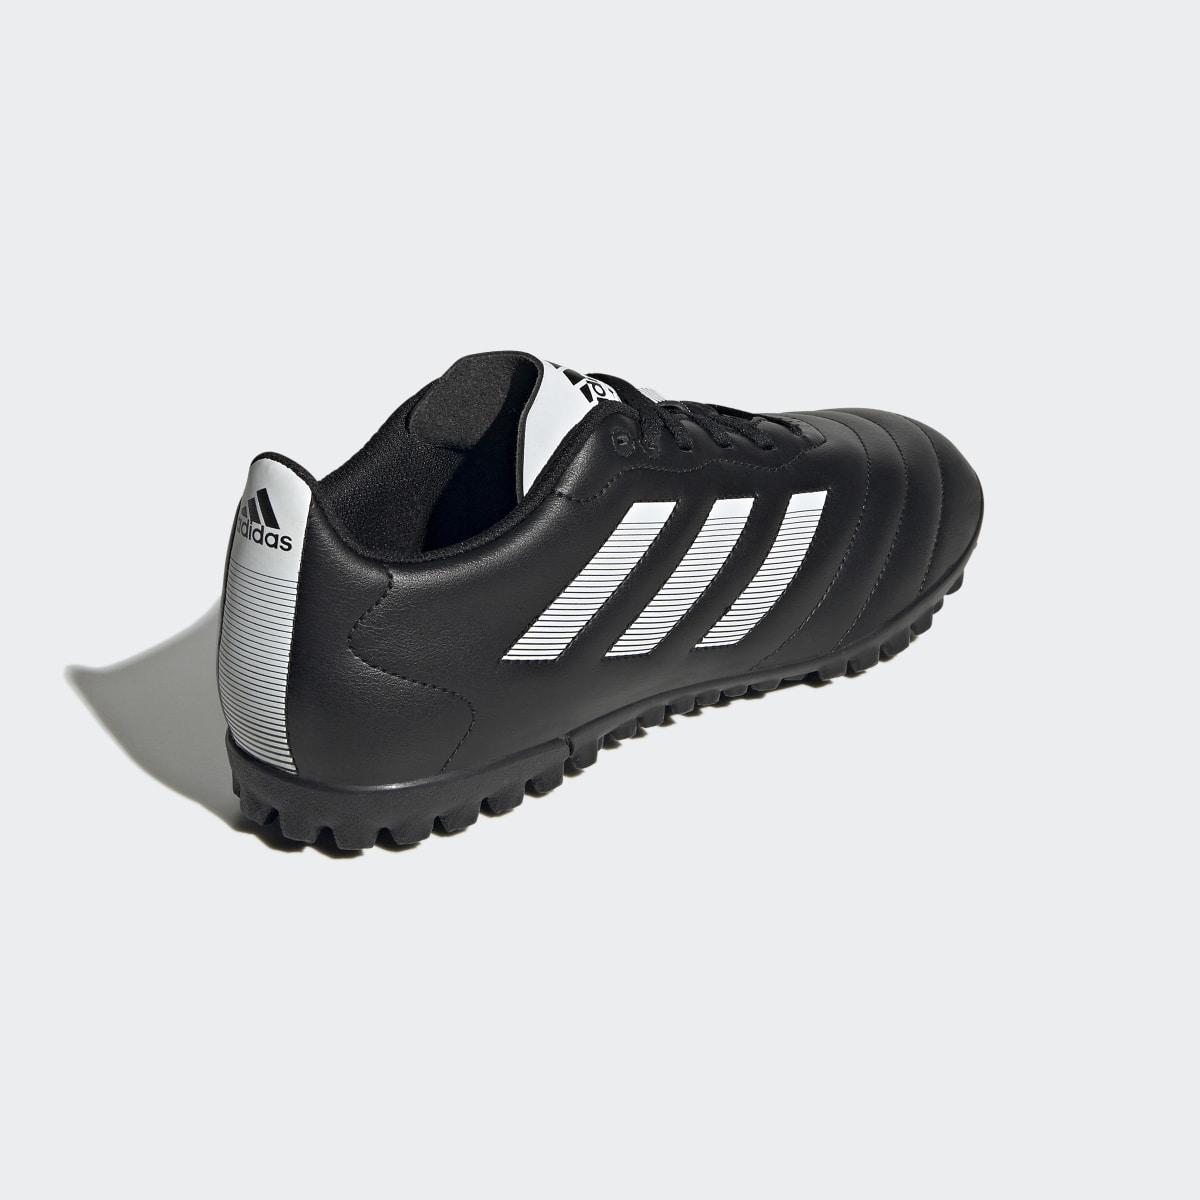 Adidas Goletto VIII Turf Boots. 6